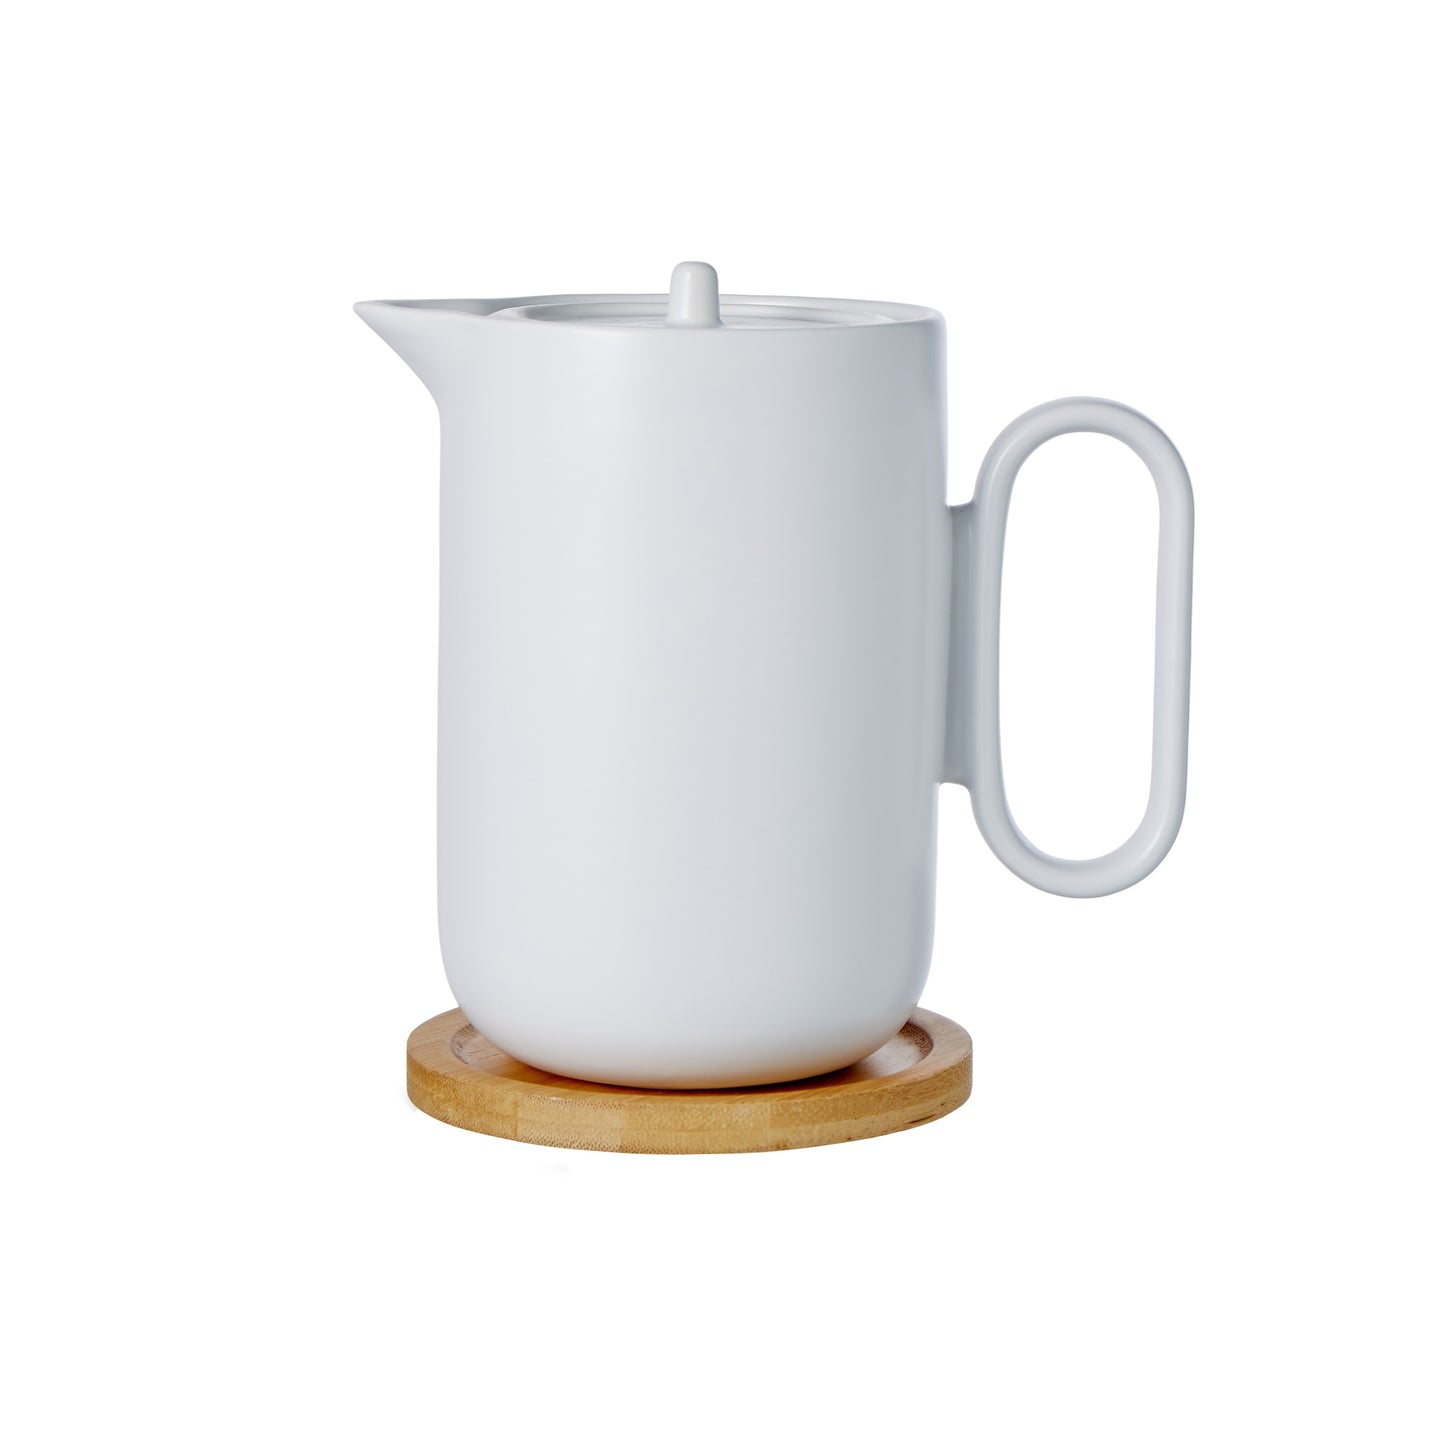 Leaf & Bean - Ceramic Coffee Jug & Filter Set - 900ml - White